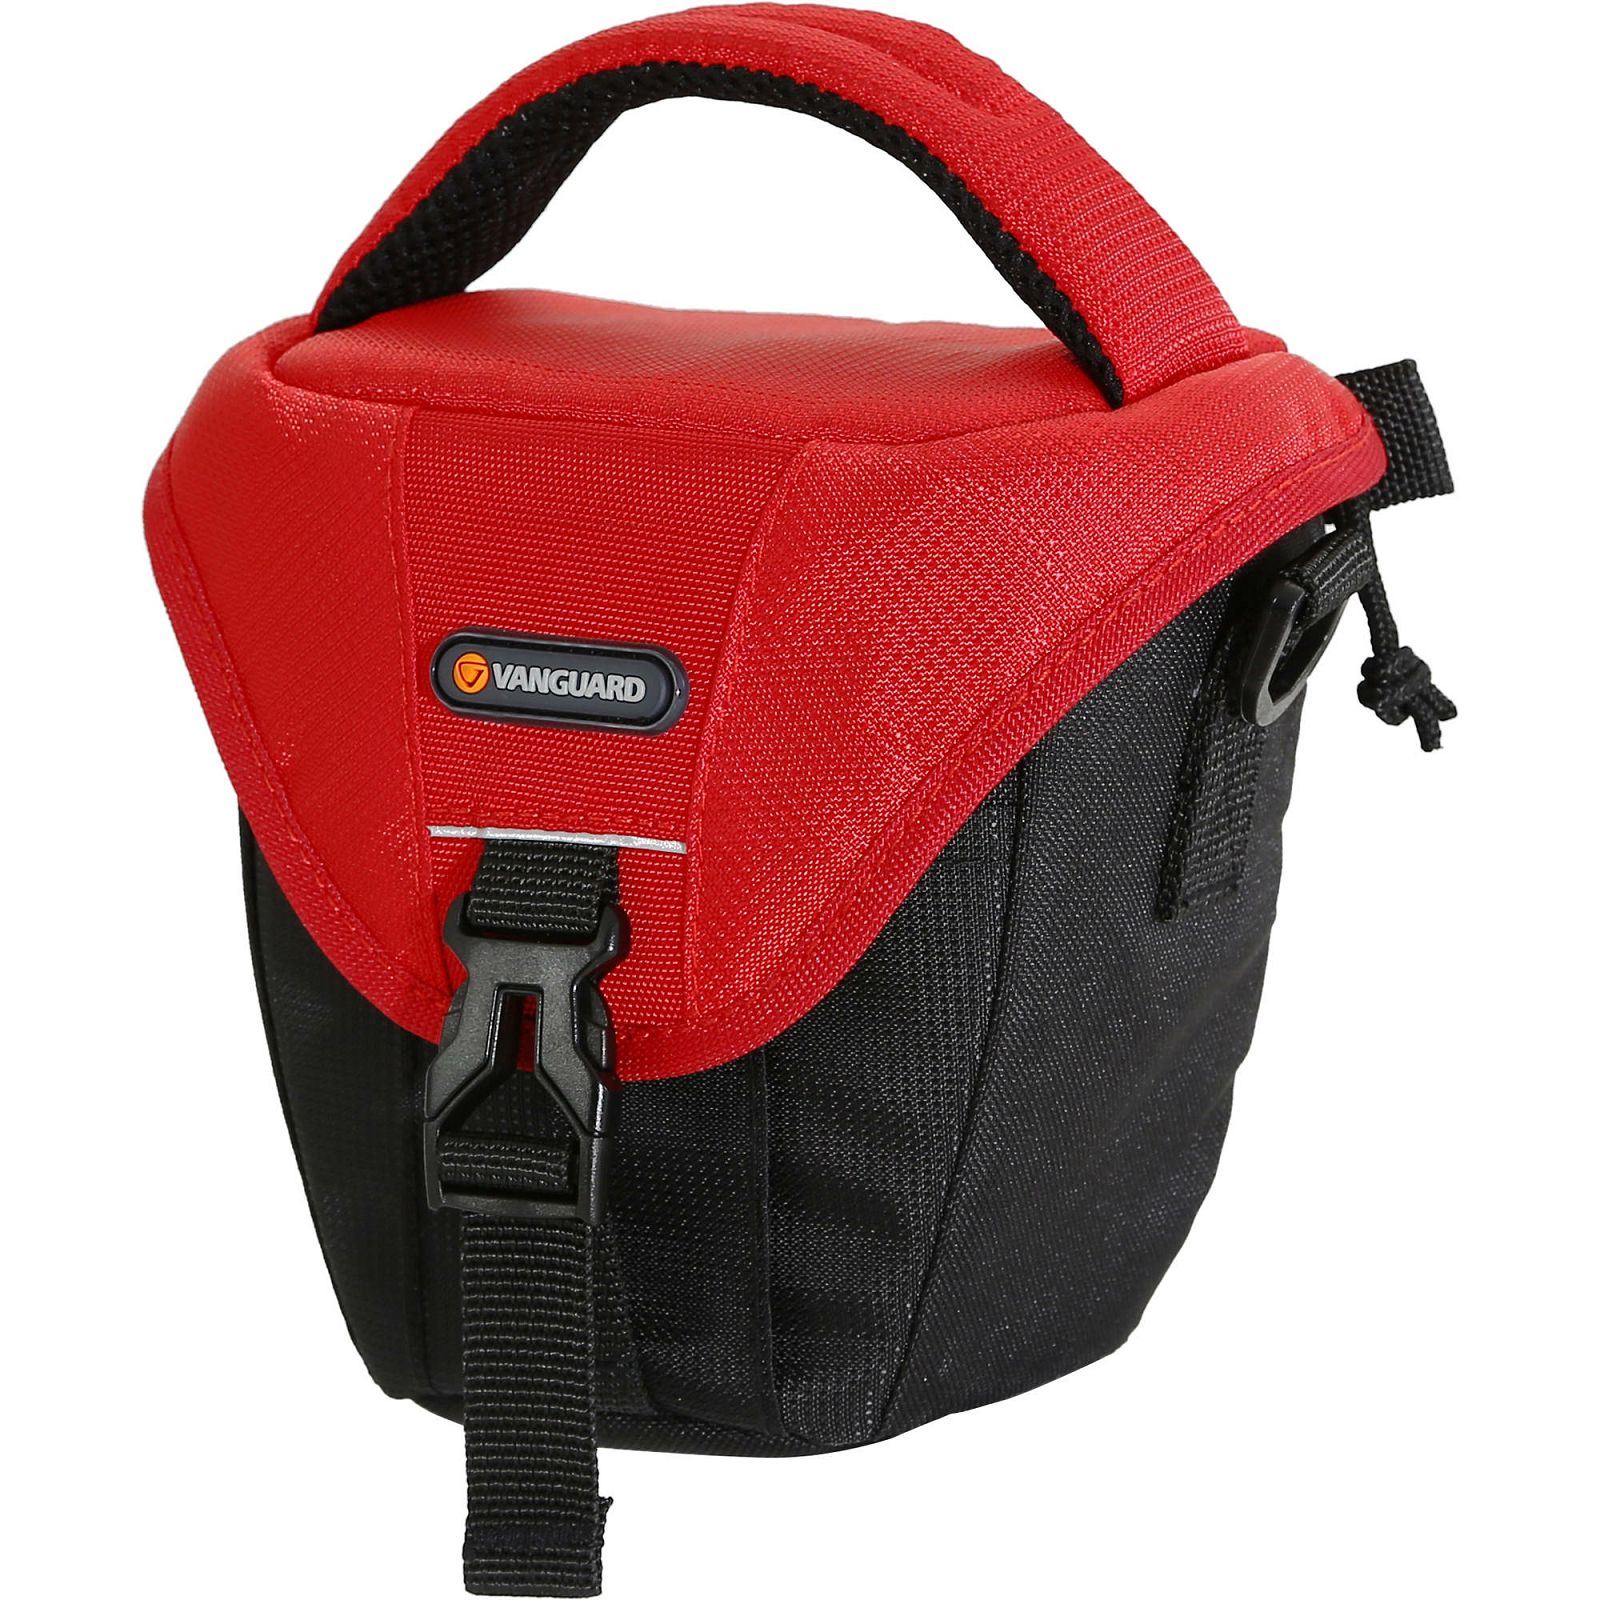 Vanguard BIIN II 12z Red crvena toploader torba za mirrorless ili kompaktni fotoaparat